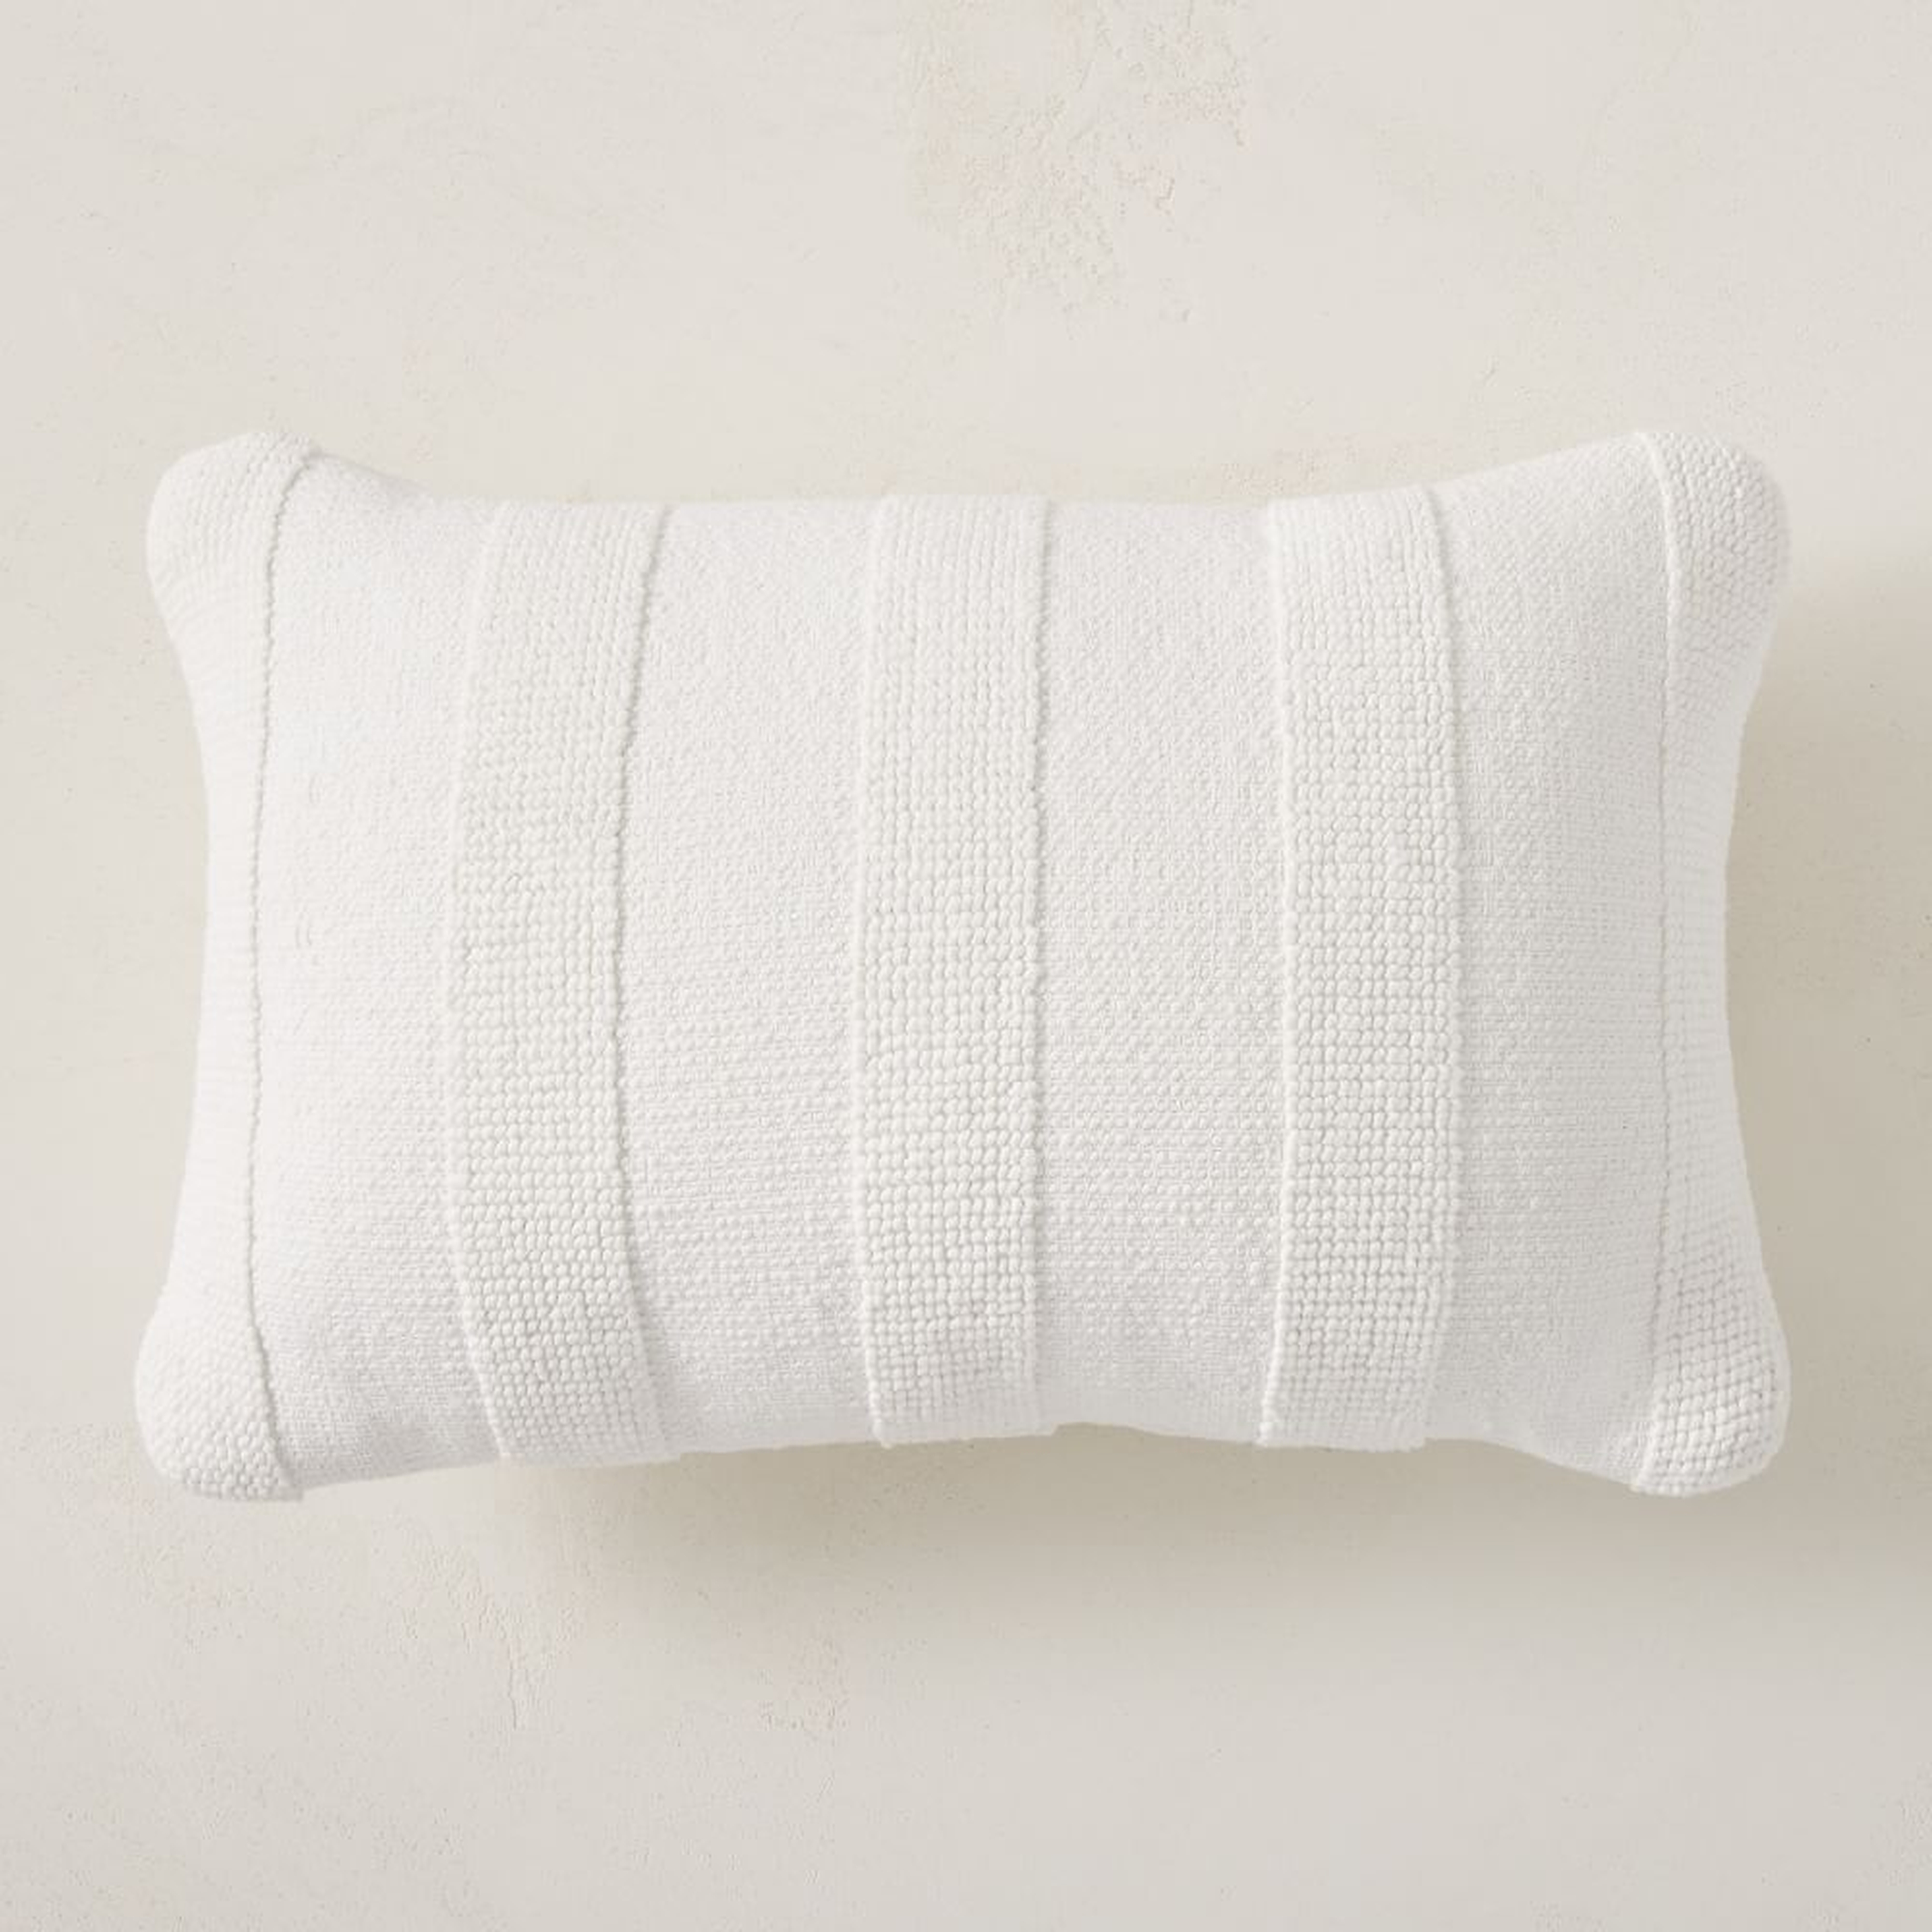 Outdoor Tufted Stripe Pillow, 12"x21", White - West Elm